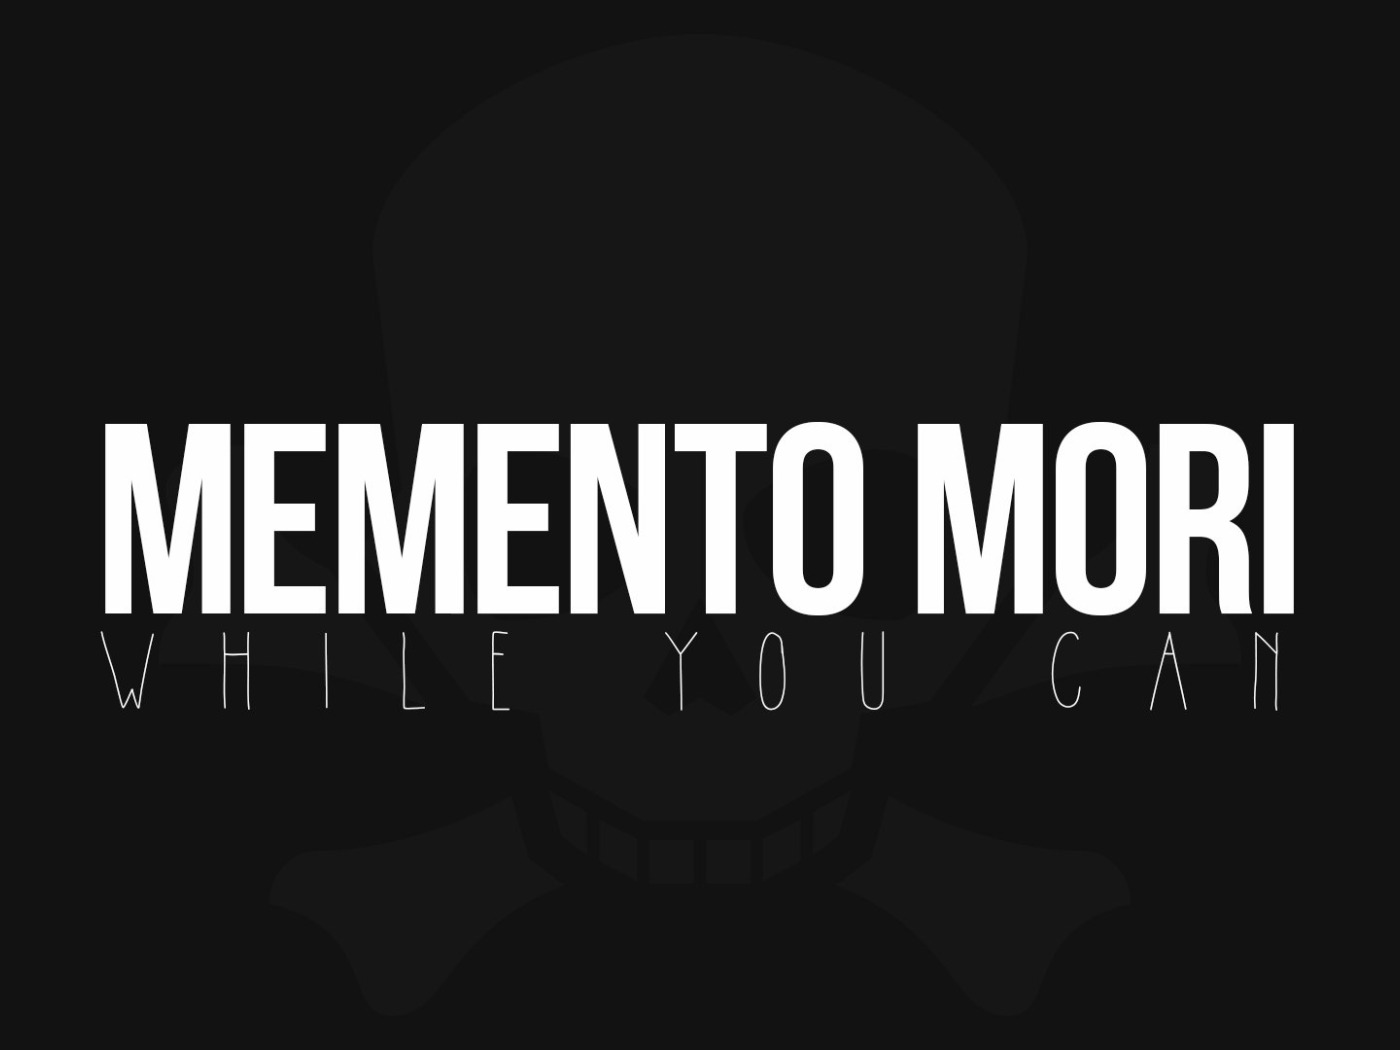 Memento mori фраза. МЕМЕНТО Мори. Momento Mori надписи. Memento Mori надпись. Моменто море.